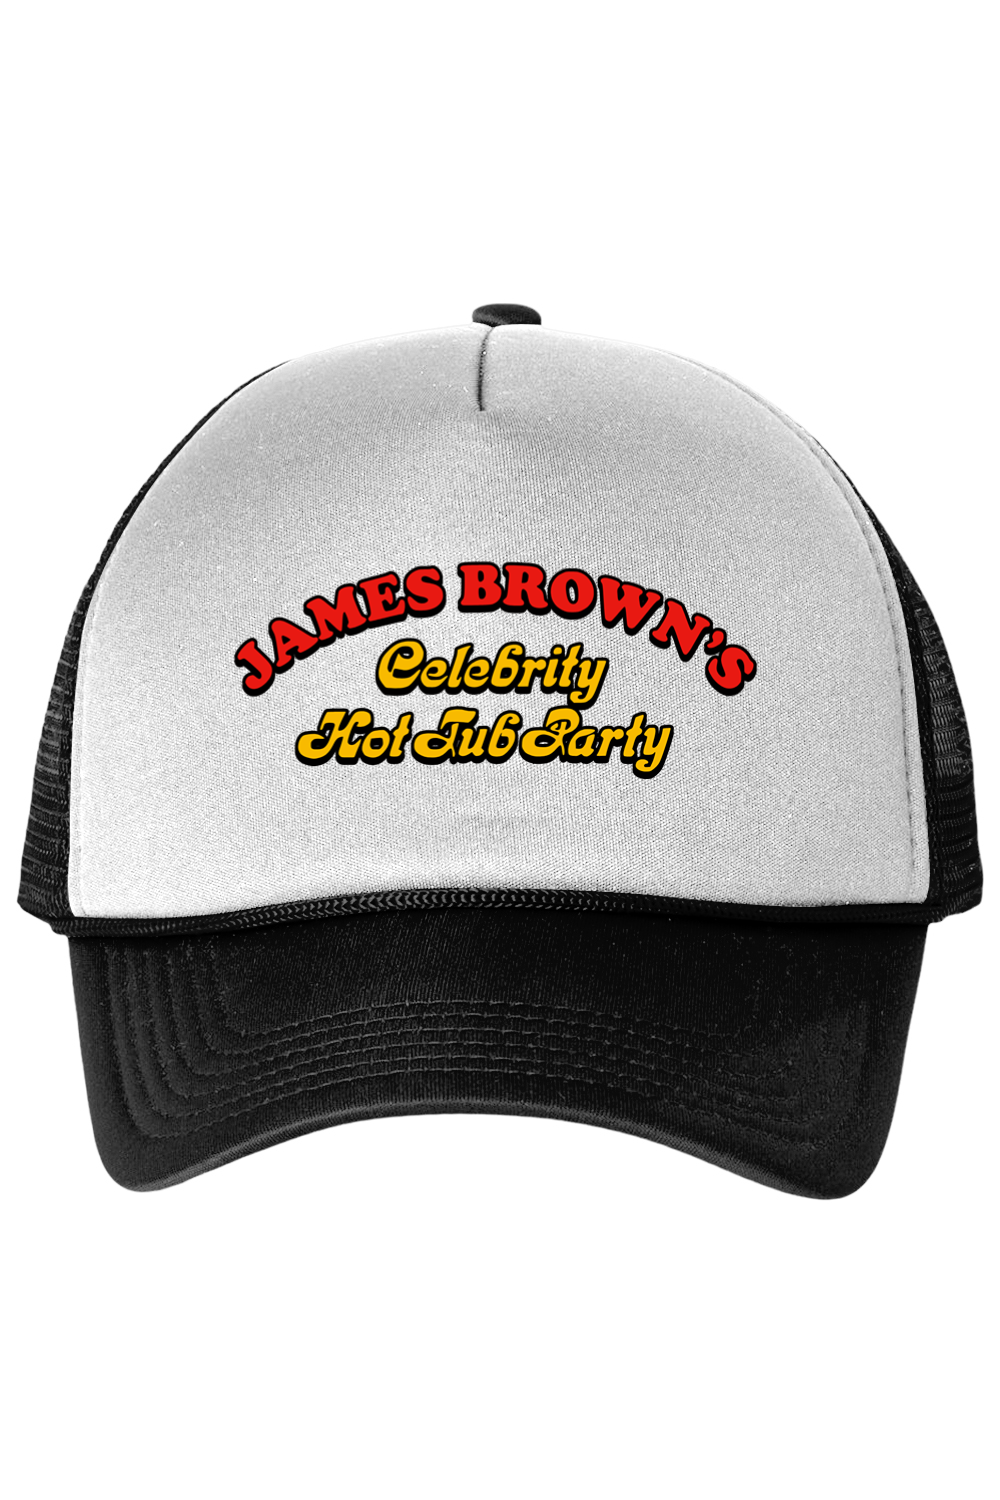 James Brown's Celebrity Hot Tub - Trucker Cap - Yinzylvania